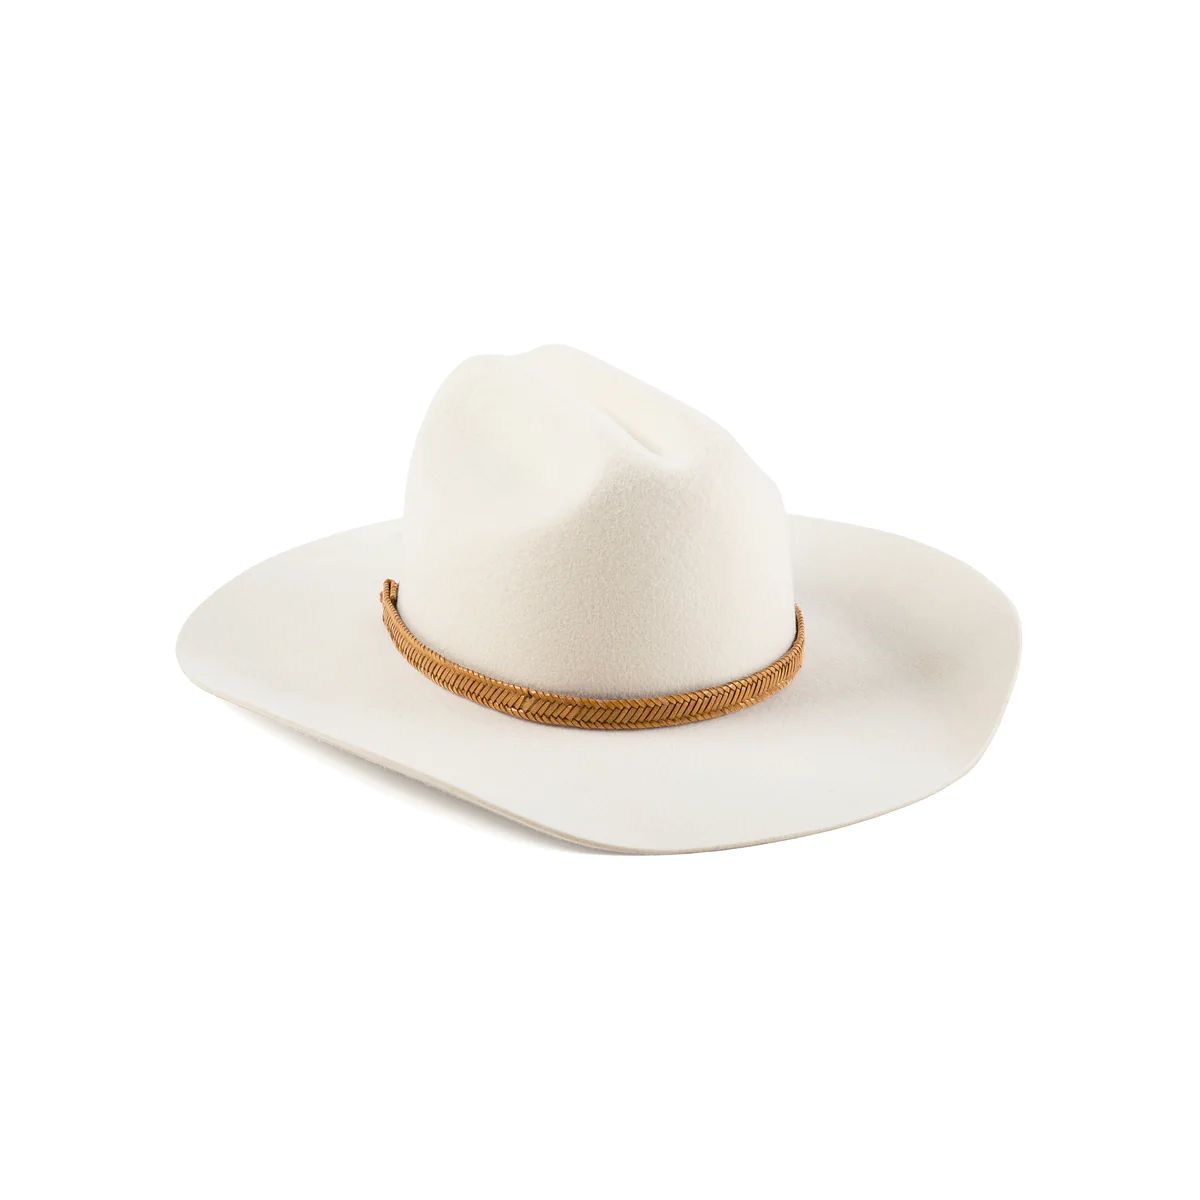 The Ridge - Wool Felt Cowboy Hat in White | Lack of Color US | Lack of Color